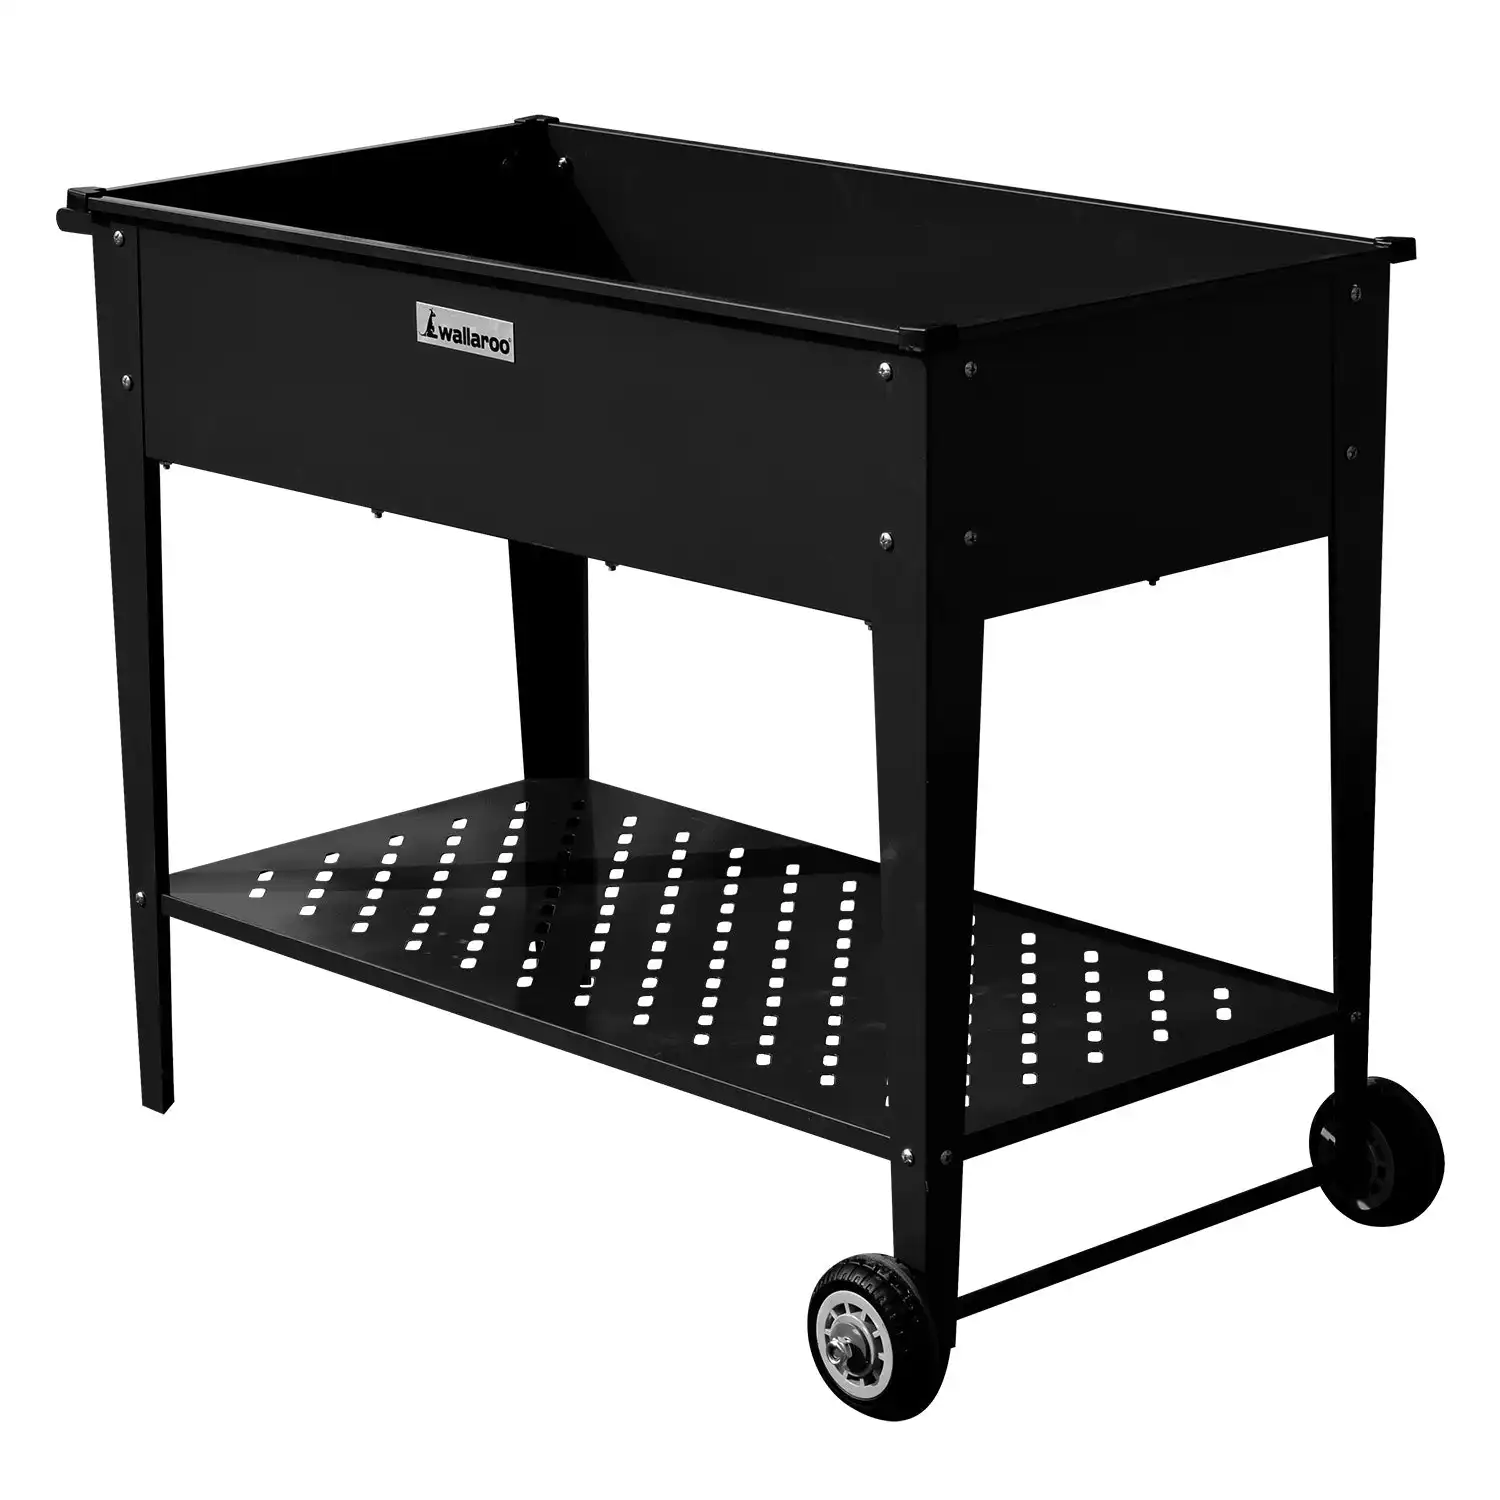 Wallaroo 108.5 x 50.5 x 80cm Galvanized Steel Garden Bed Cart Raised Planter Box - Black